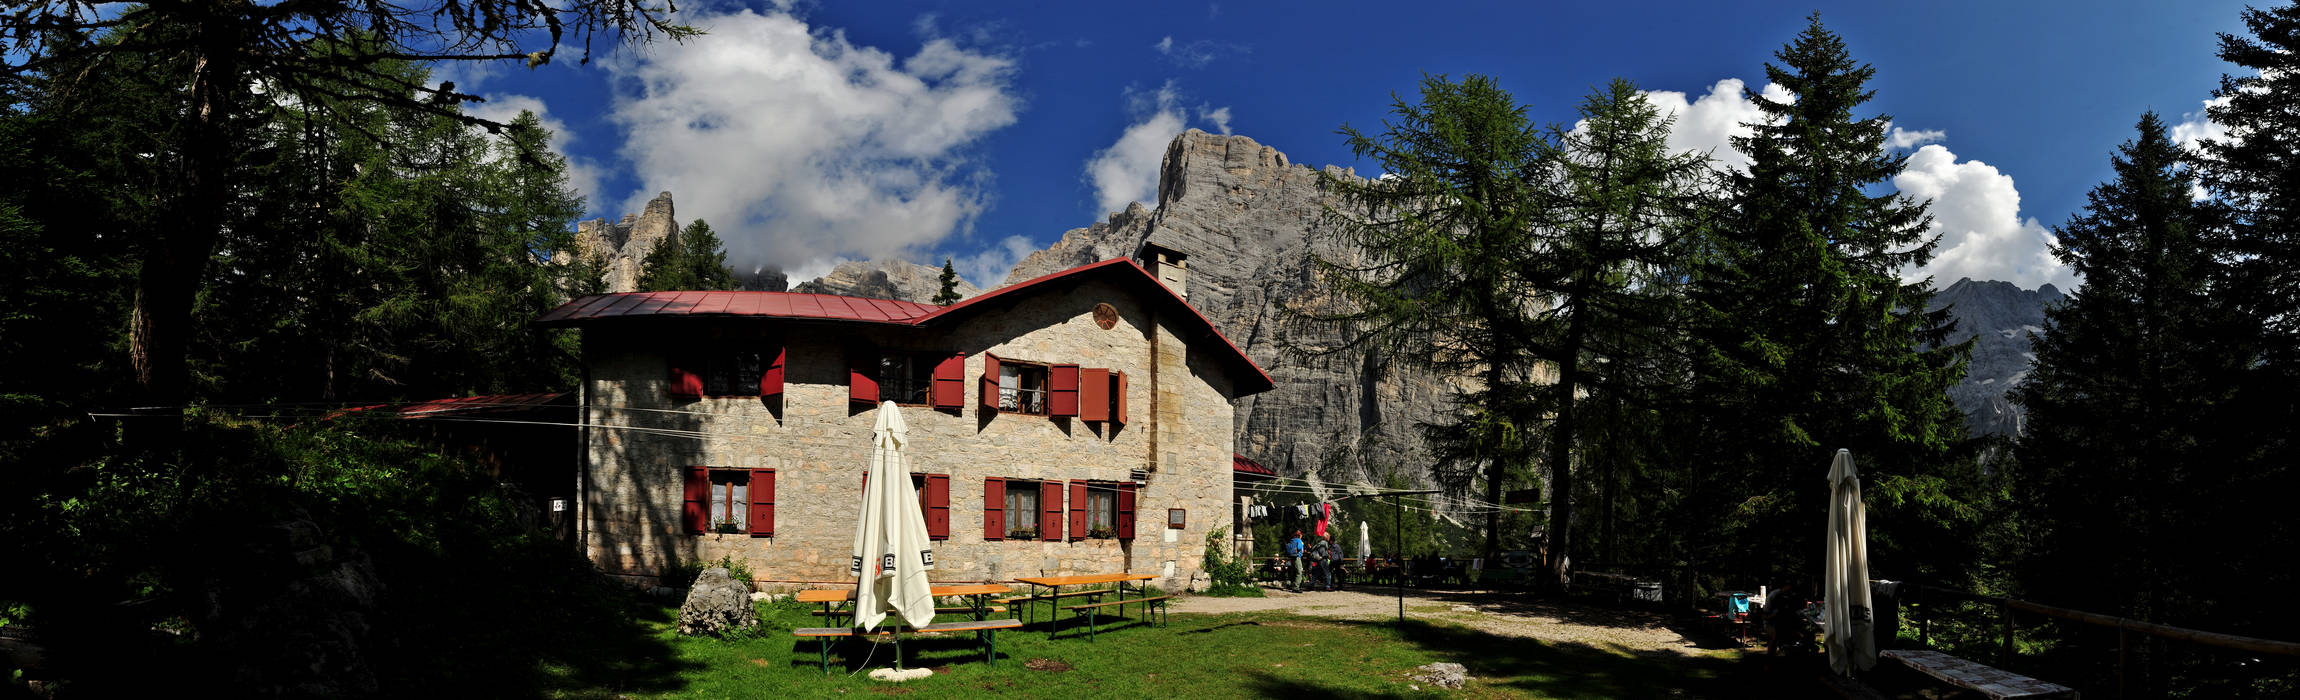 rifugio Vazzoler in Civetta, Dolomiti